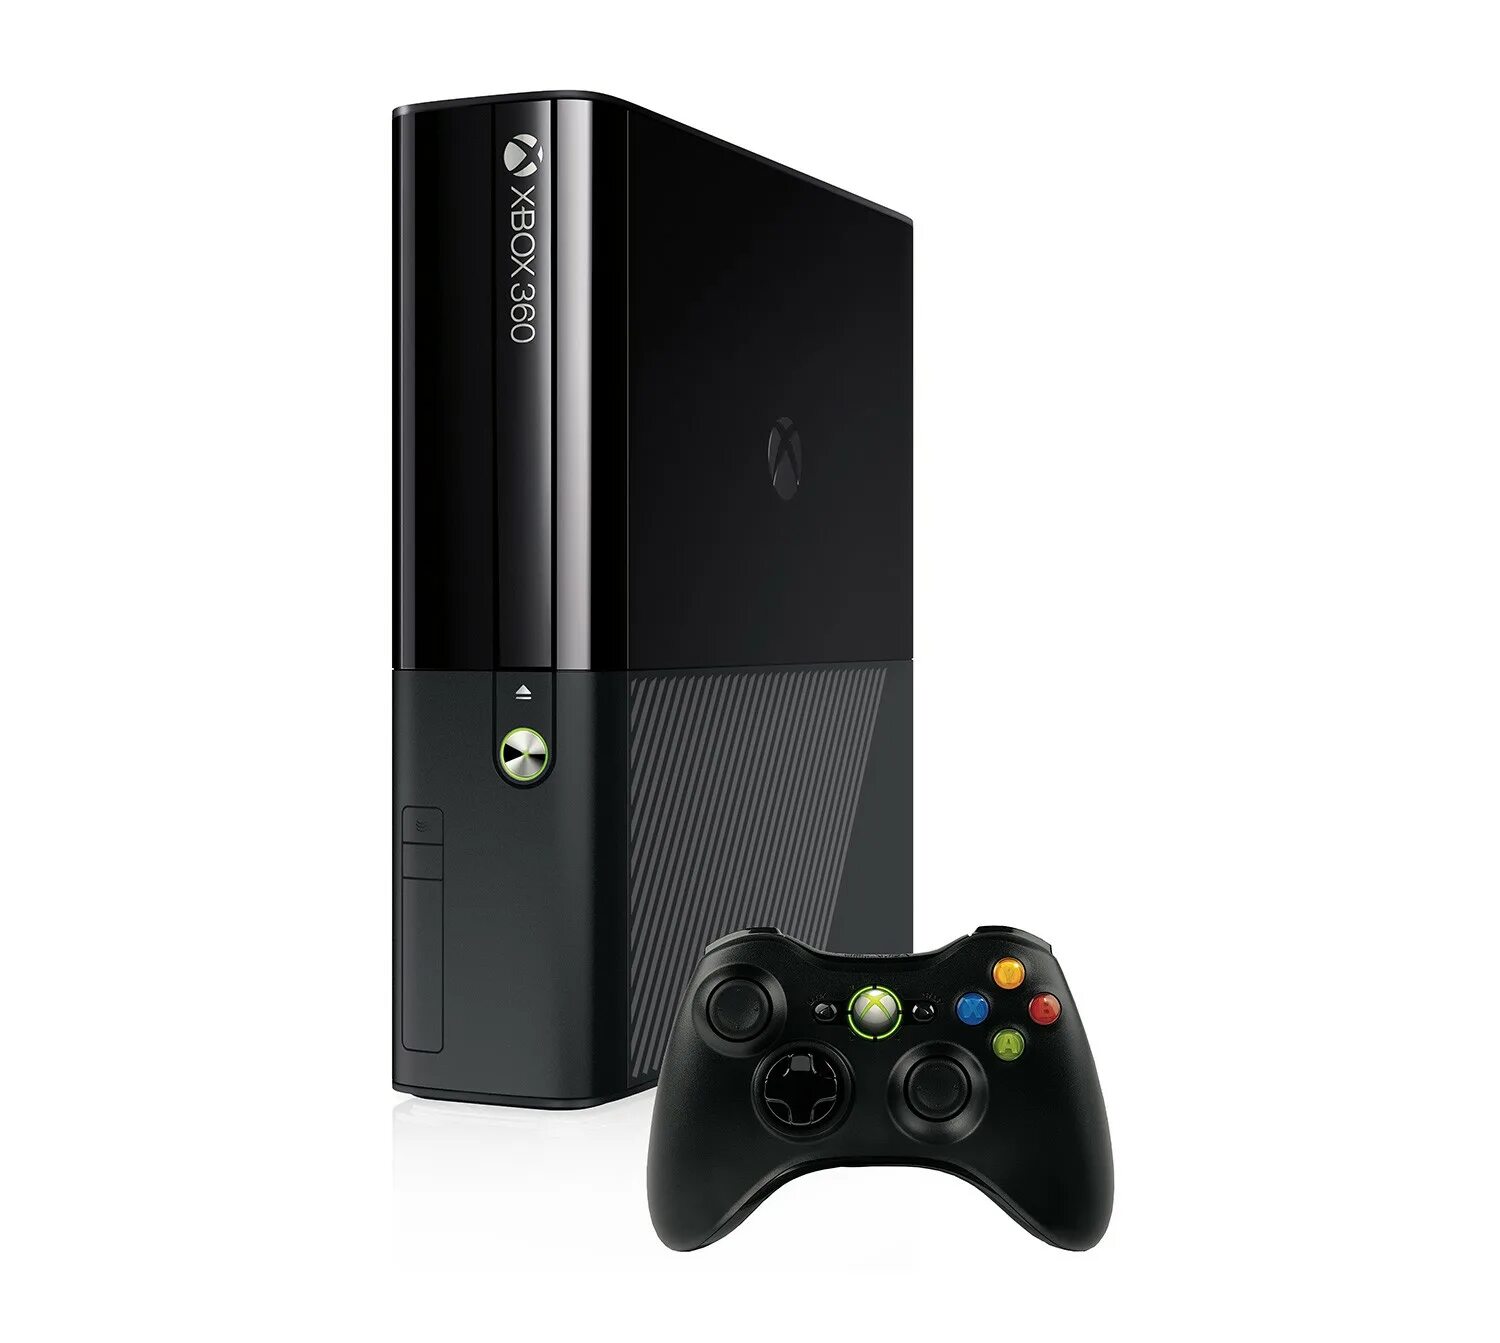 Xbox 360 e. Xbox 360 е 500gb. Игровая приставка Microsoft Xbox 360 e 250 ГБ. Хбокс 360 слим. Хбокс слим